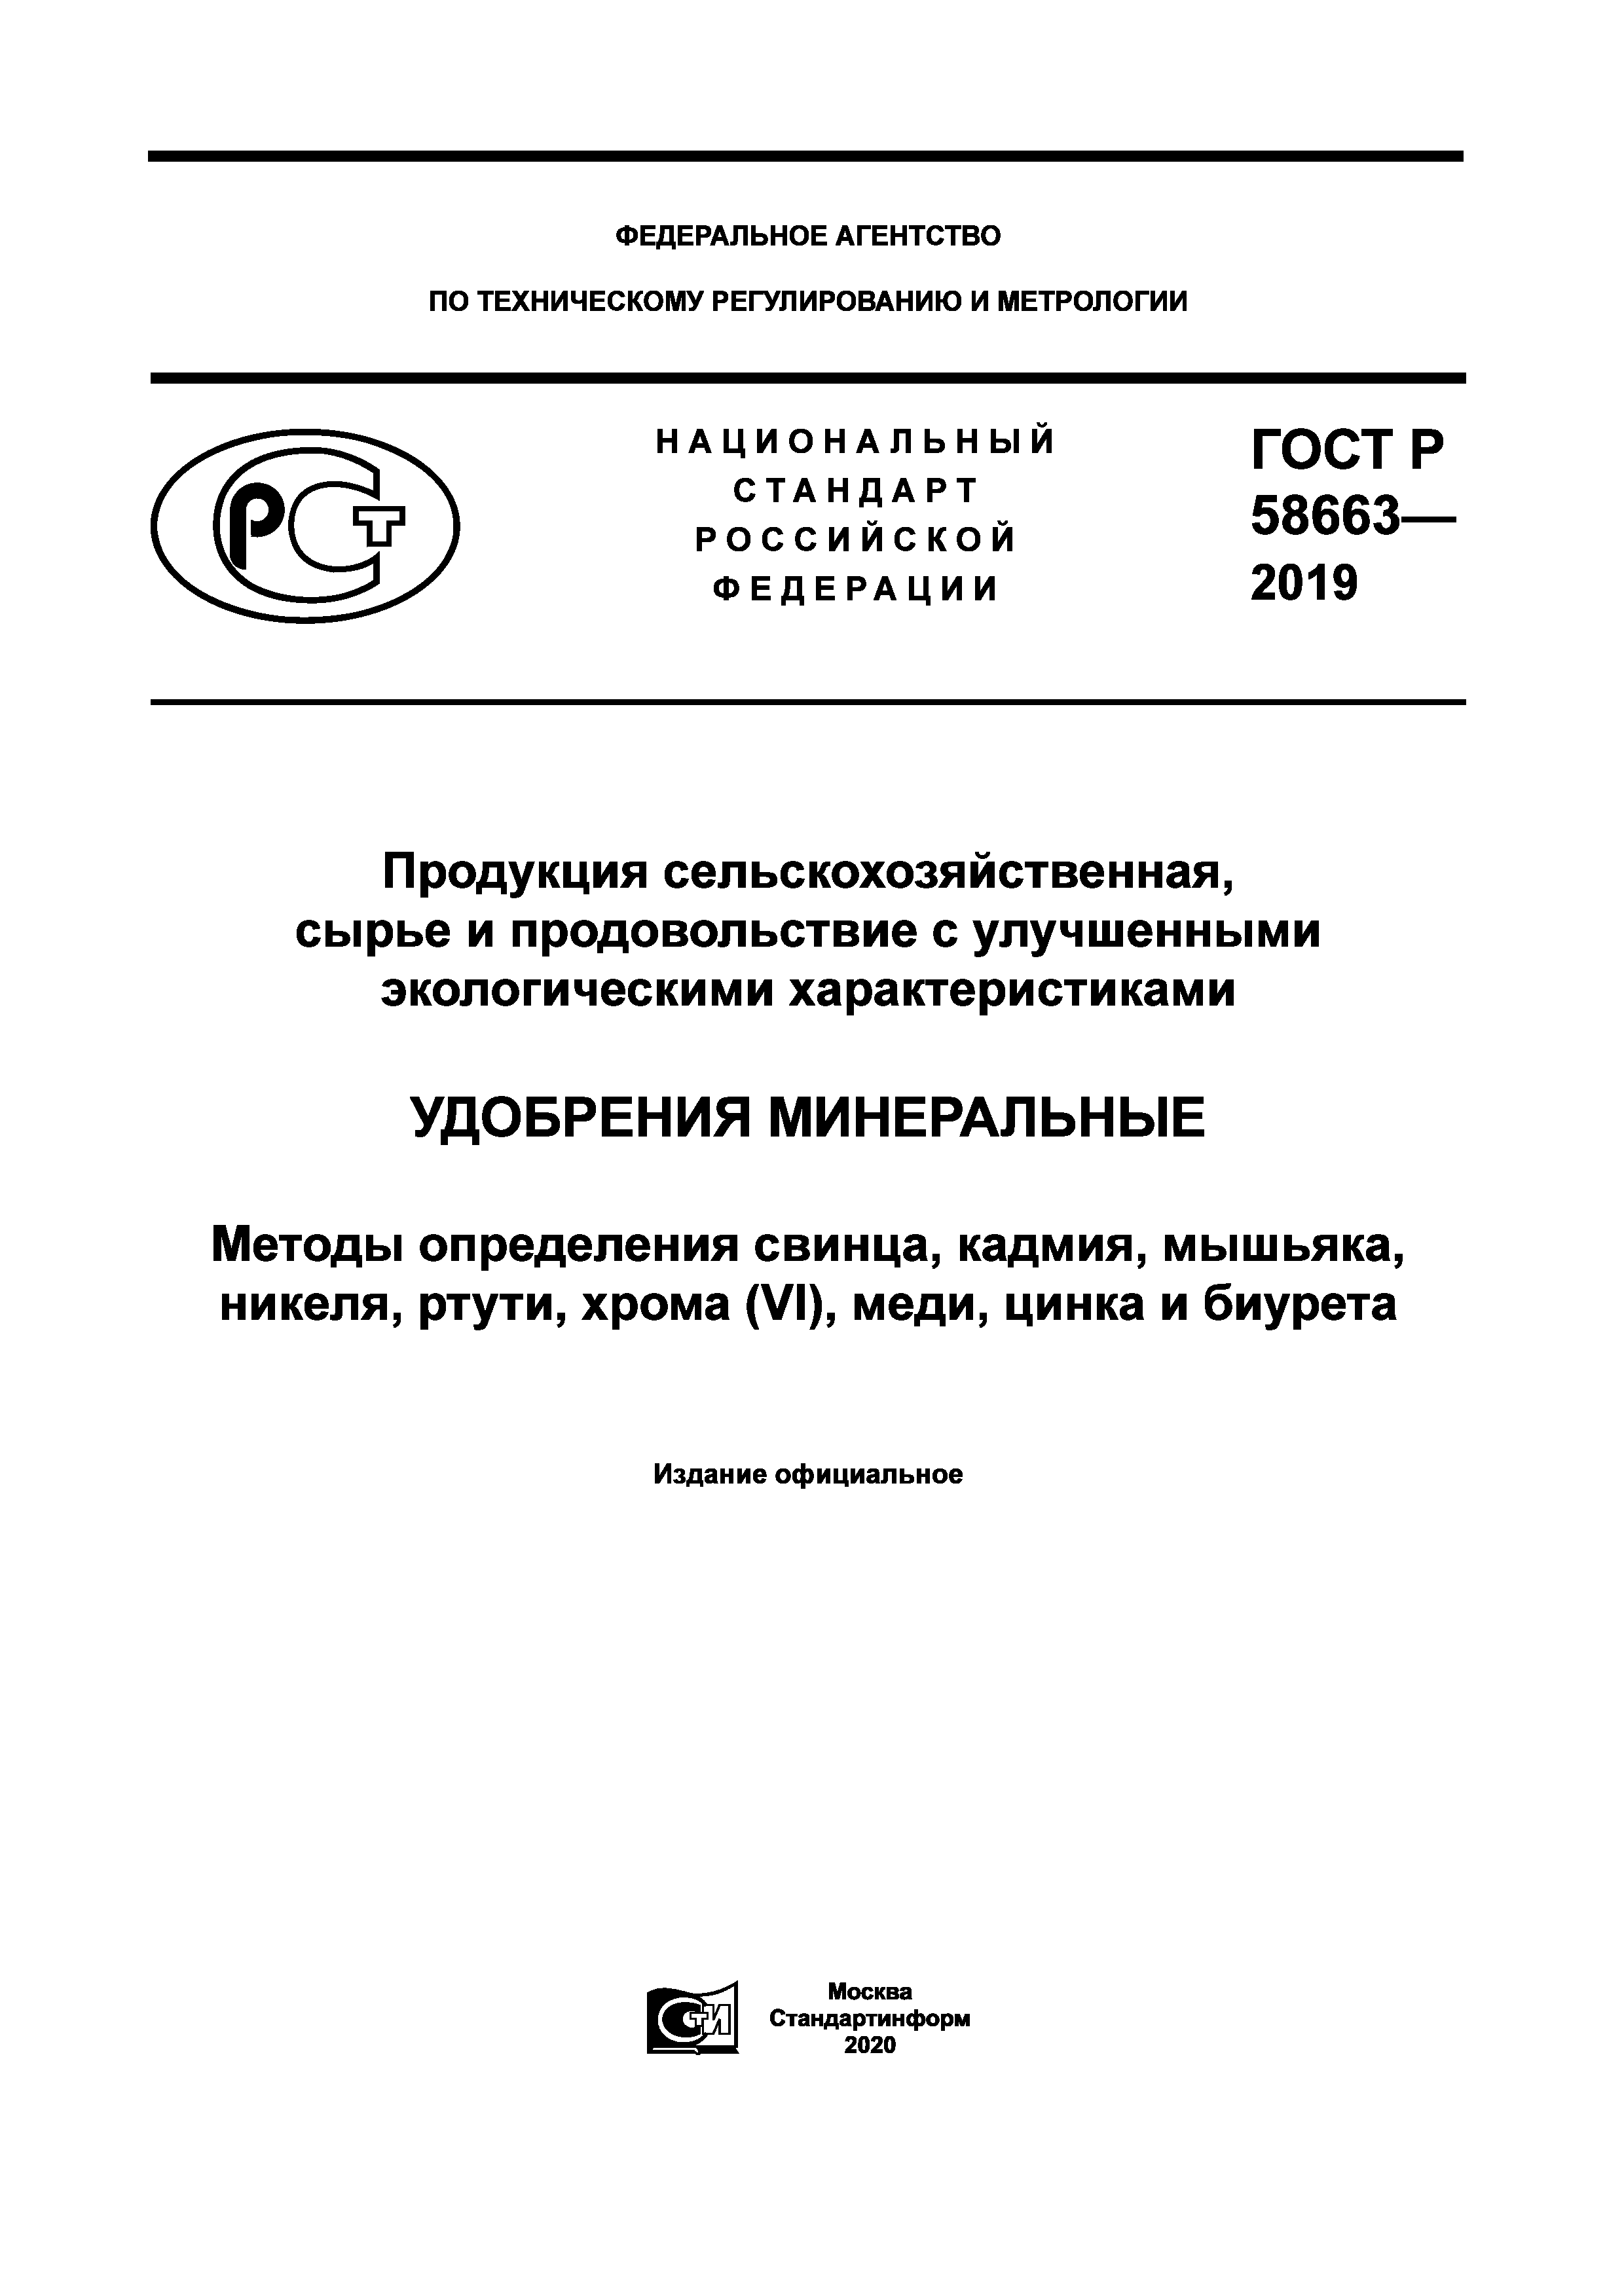 ГОСТ Р 58663-2019